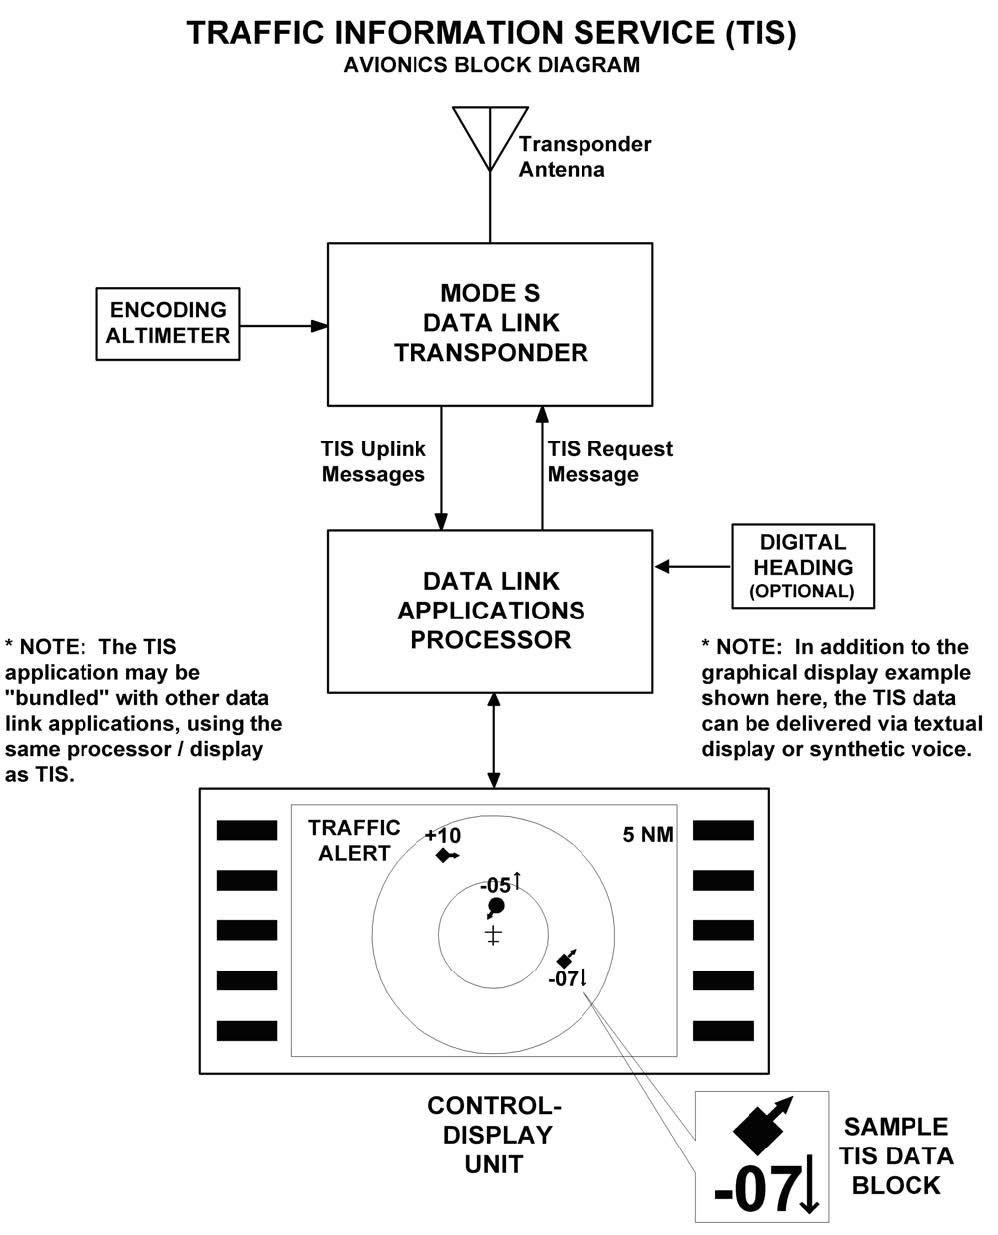 A graphic depicting the TIS avionics block diagram.